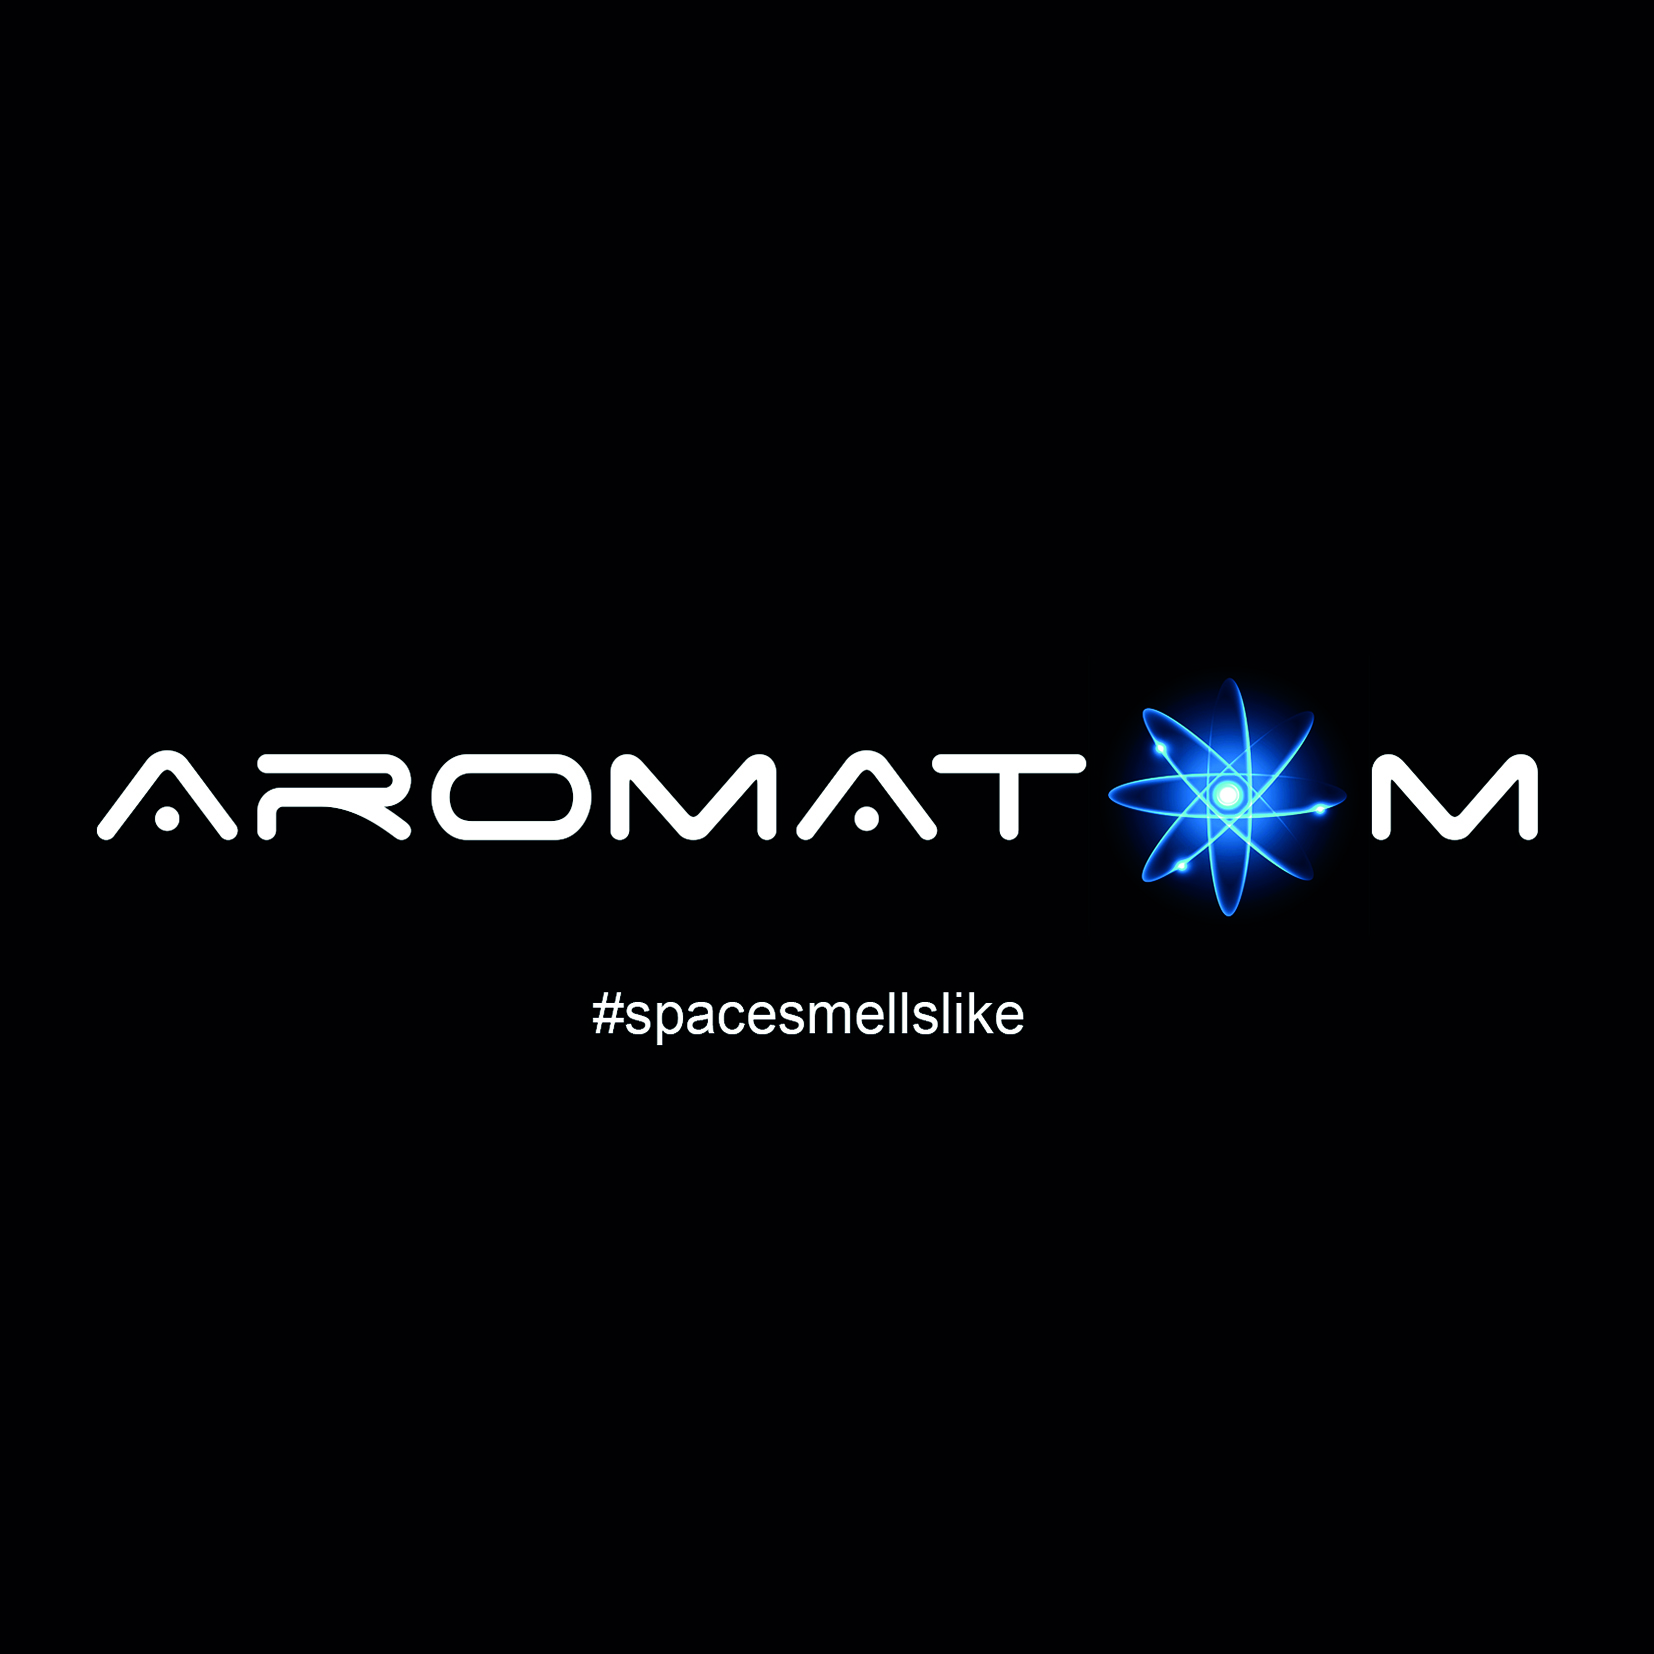 Aromatom logo with hashtag square.jpg